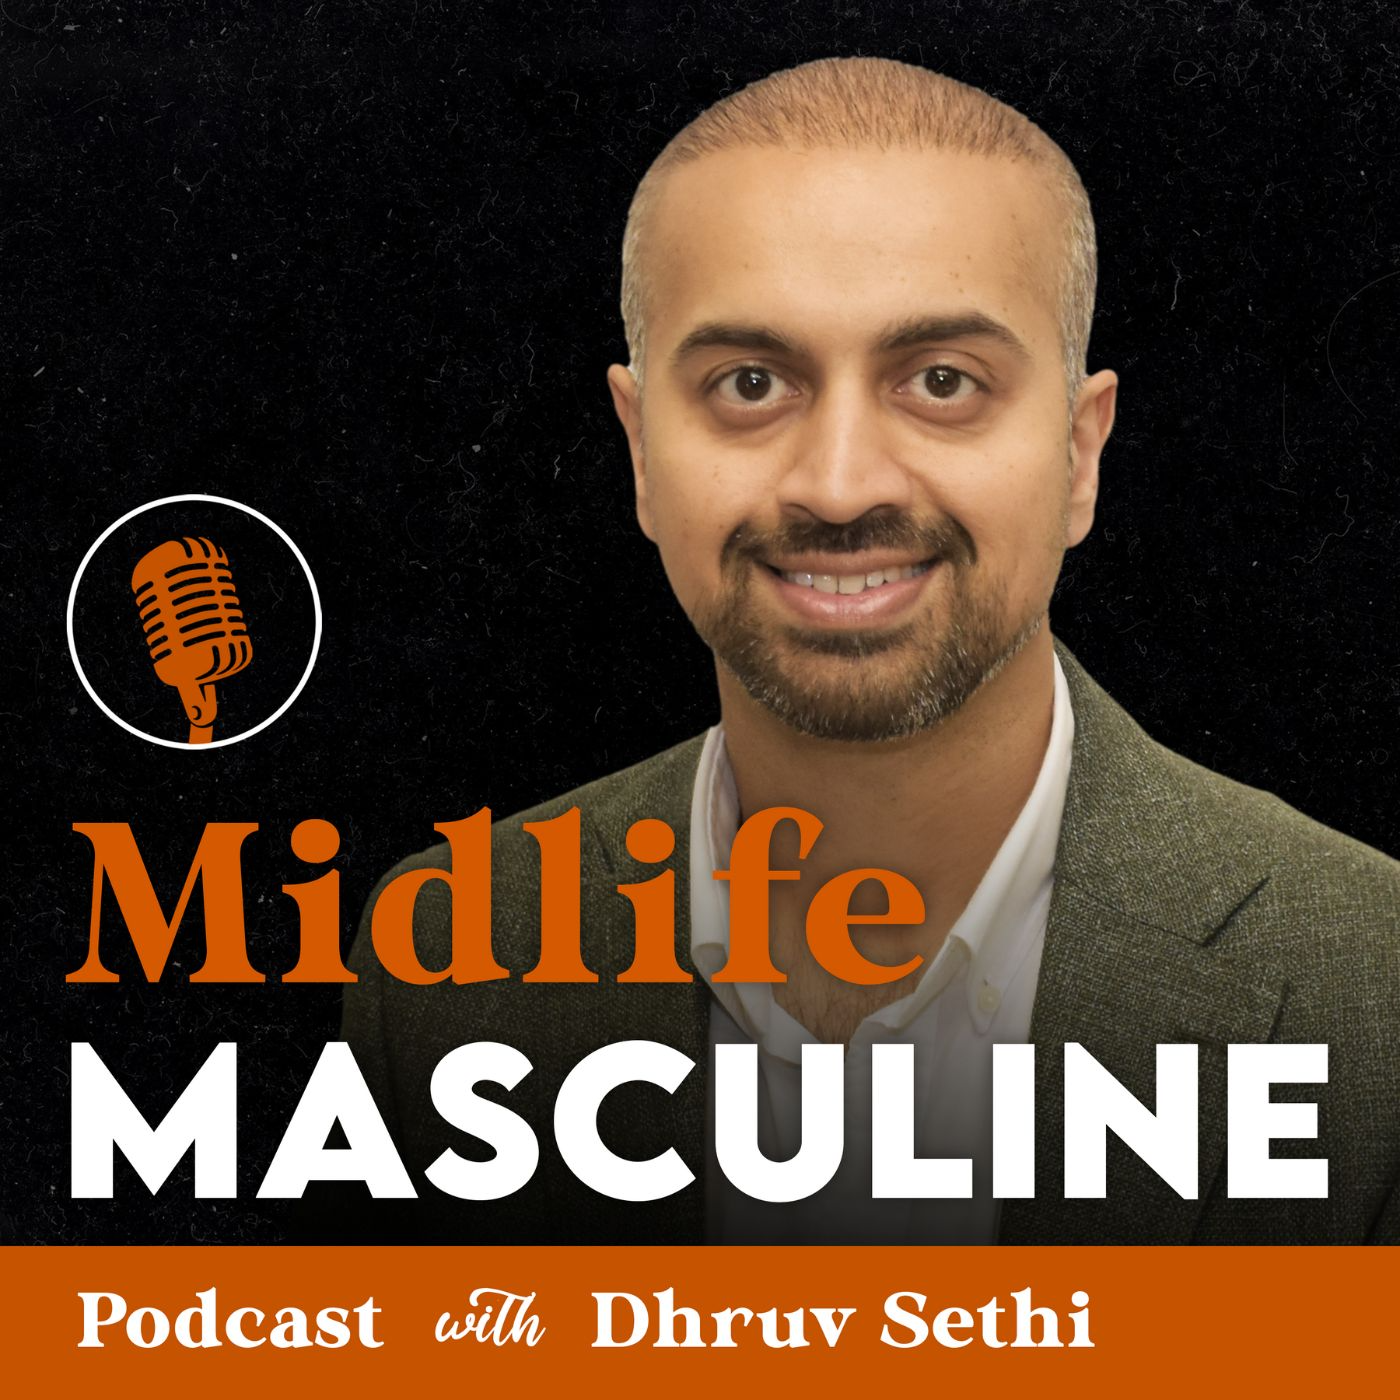 Midlife Masculine Podcast